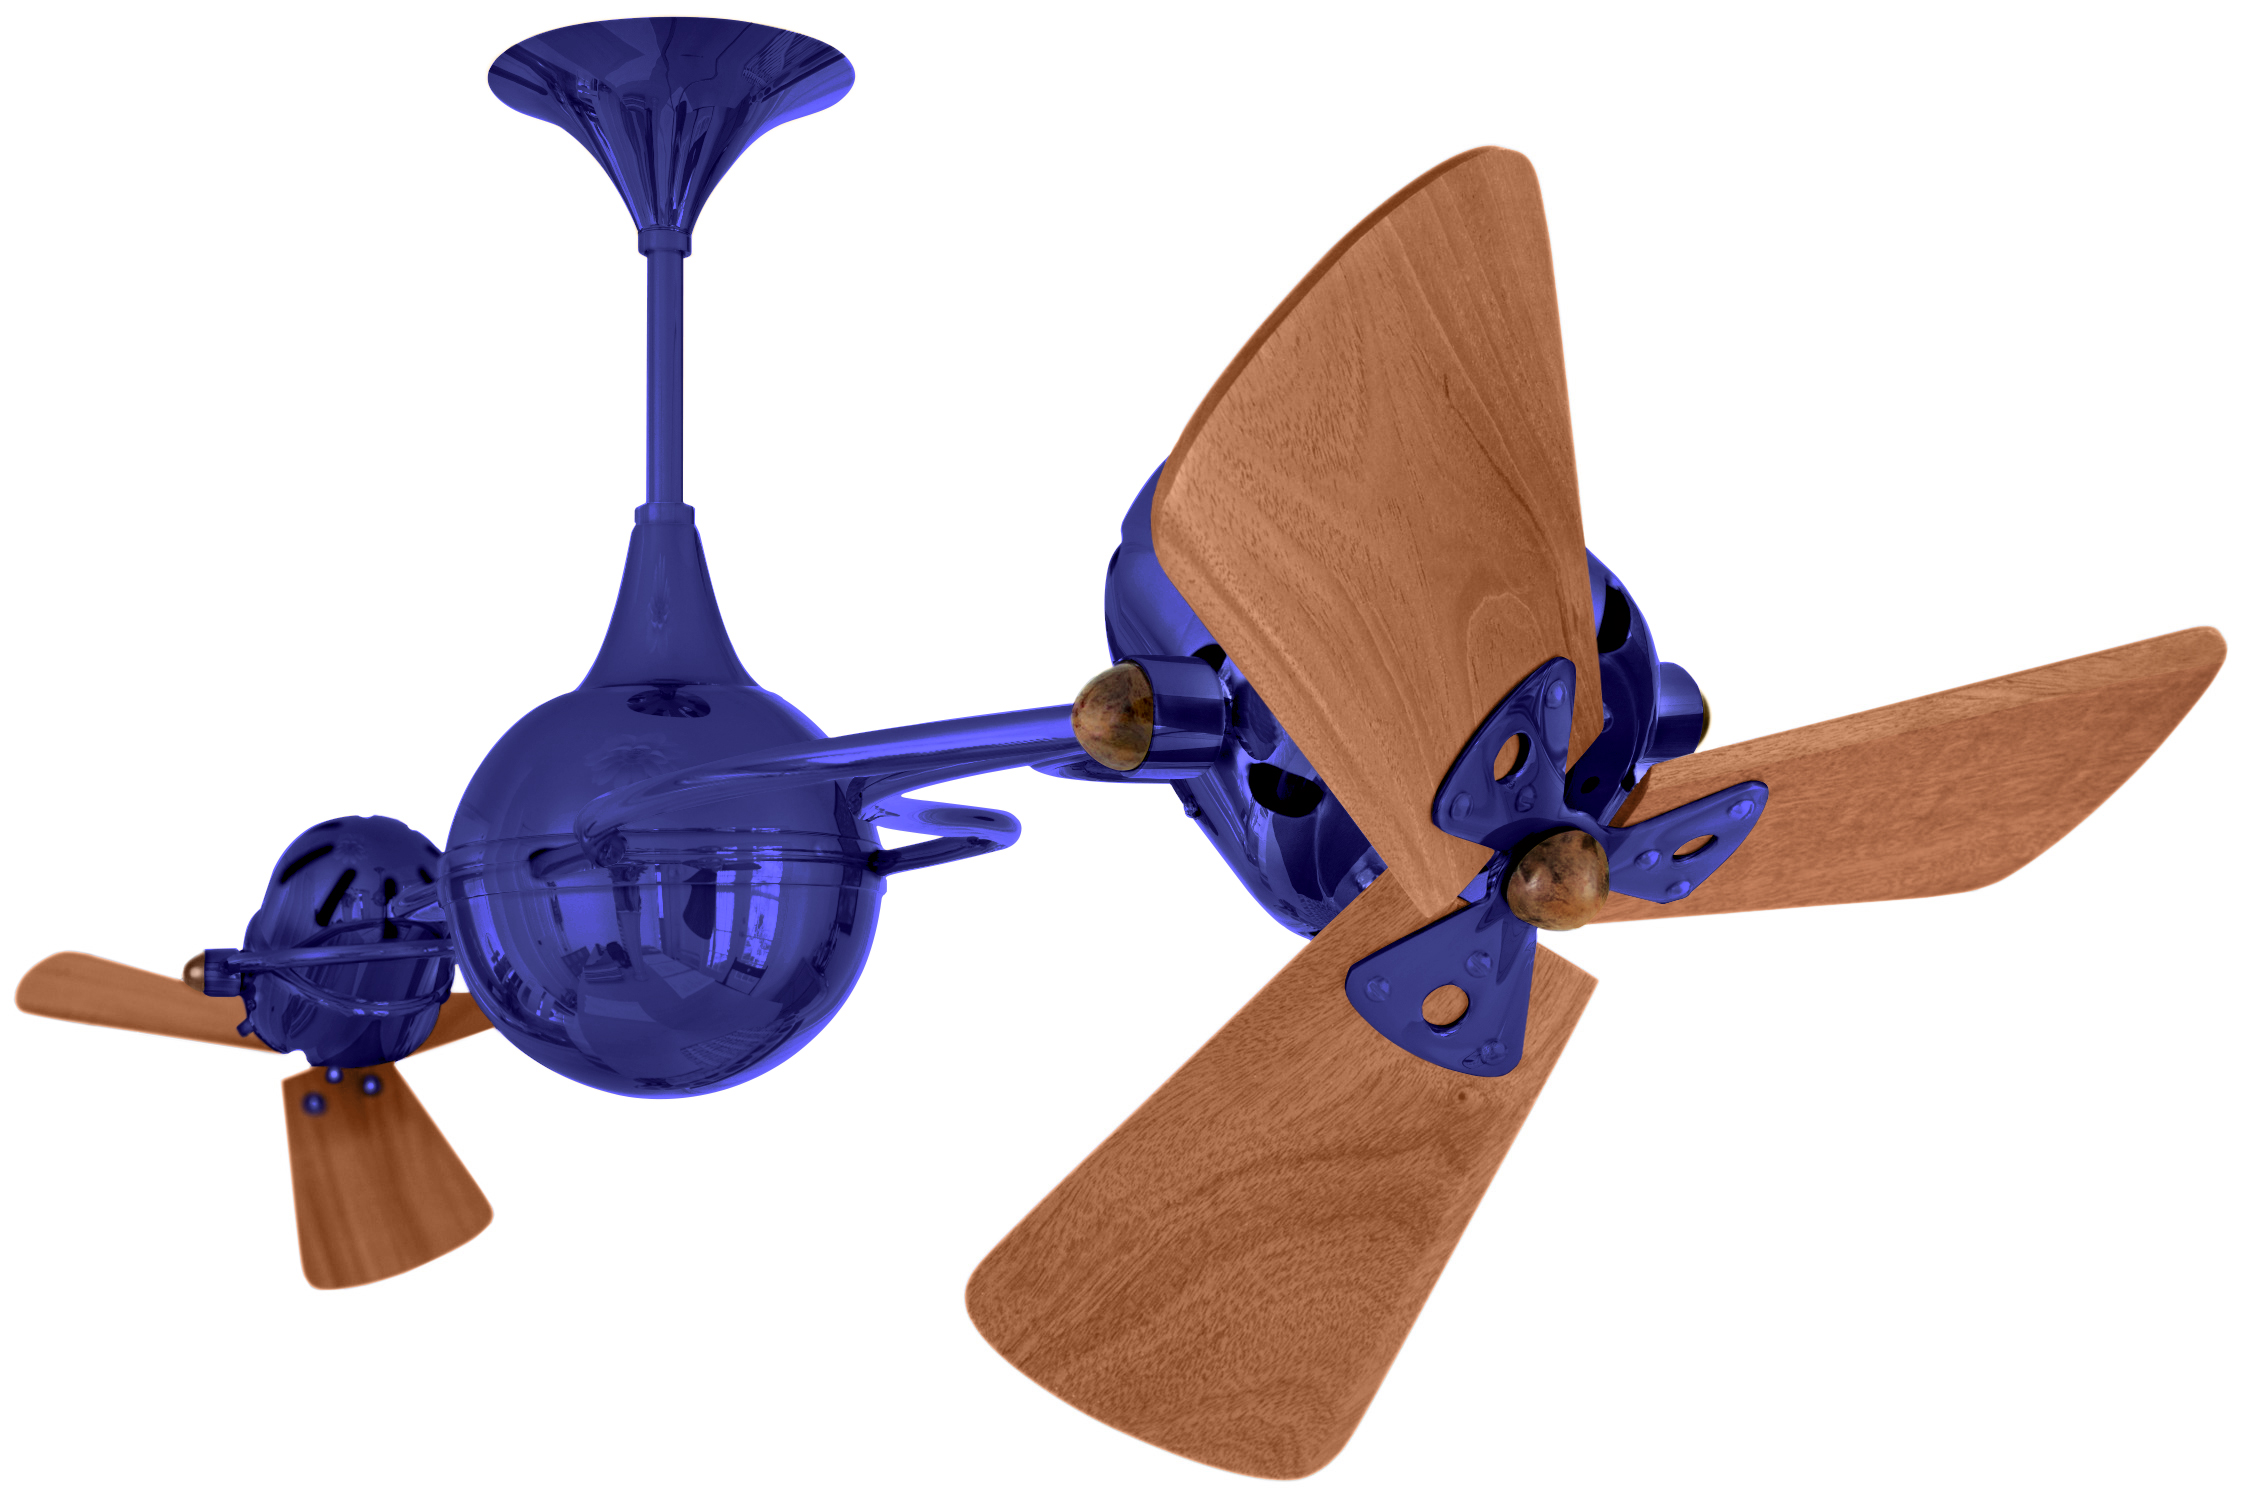 Italo Ventania rotational dual head ceiling fan in Blue / Safira finish with solid mahogany wood blades made by Matthews Fan Company.